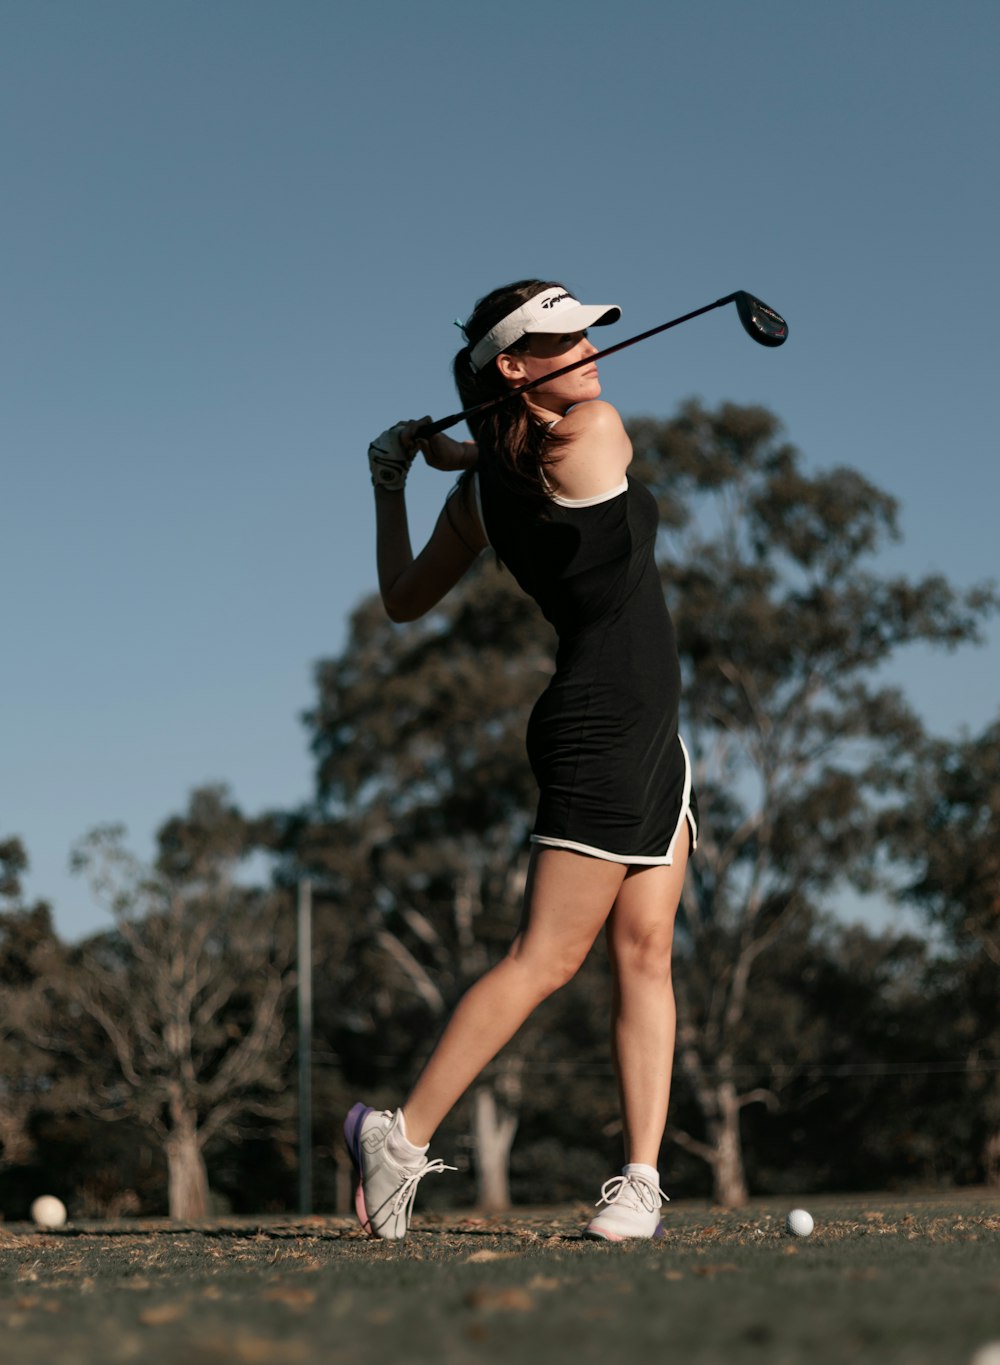 a woman swinging a golf club at a ball